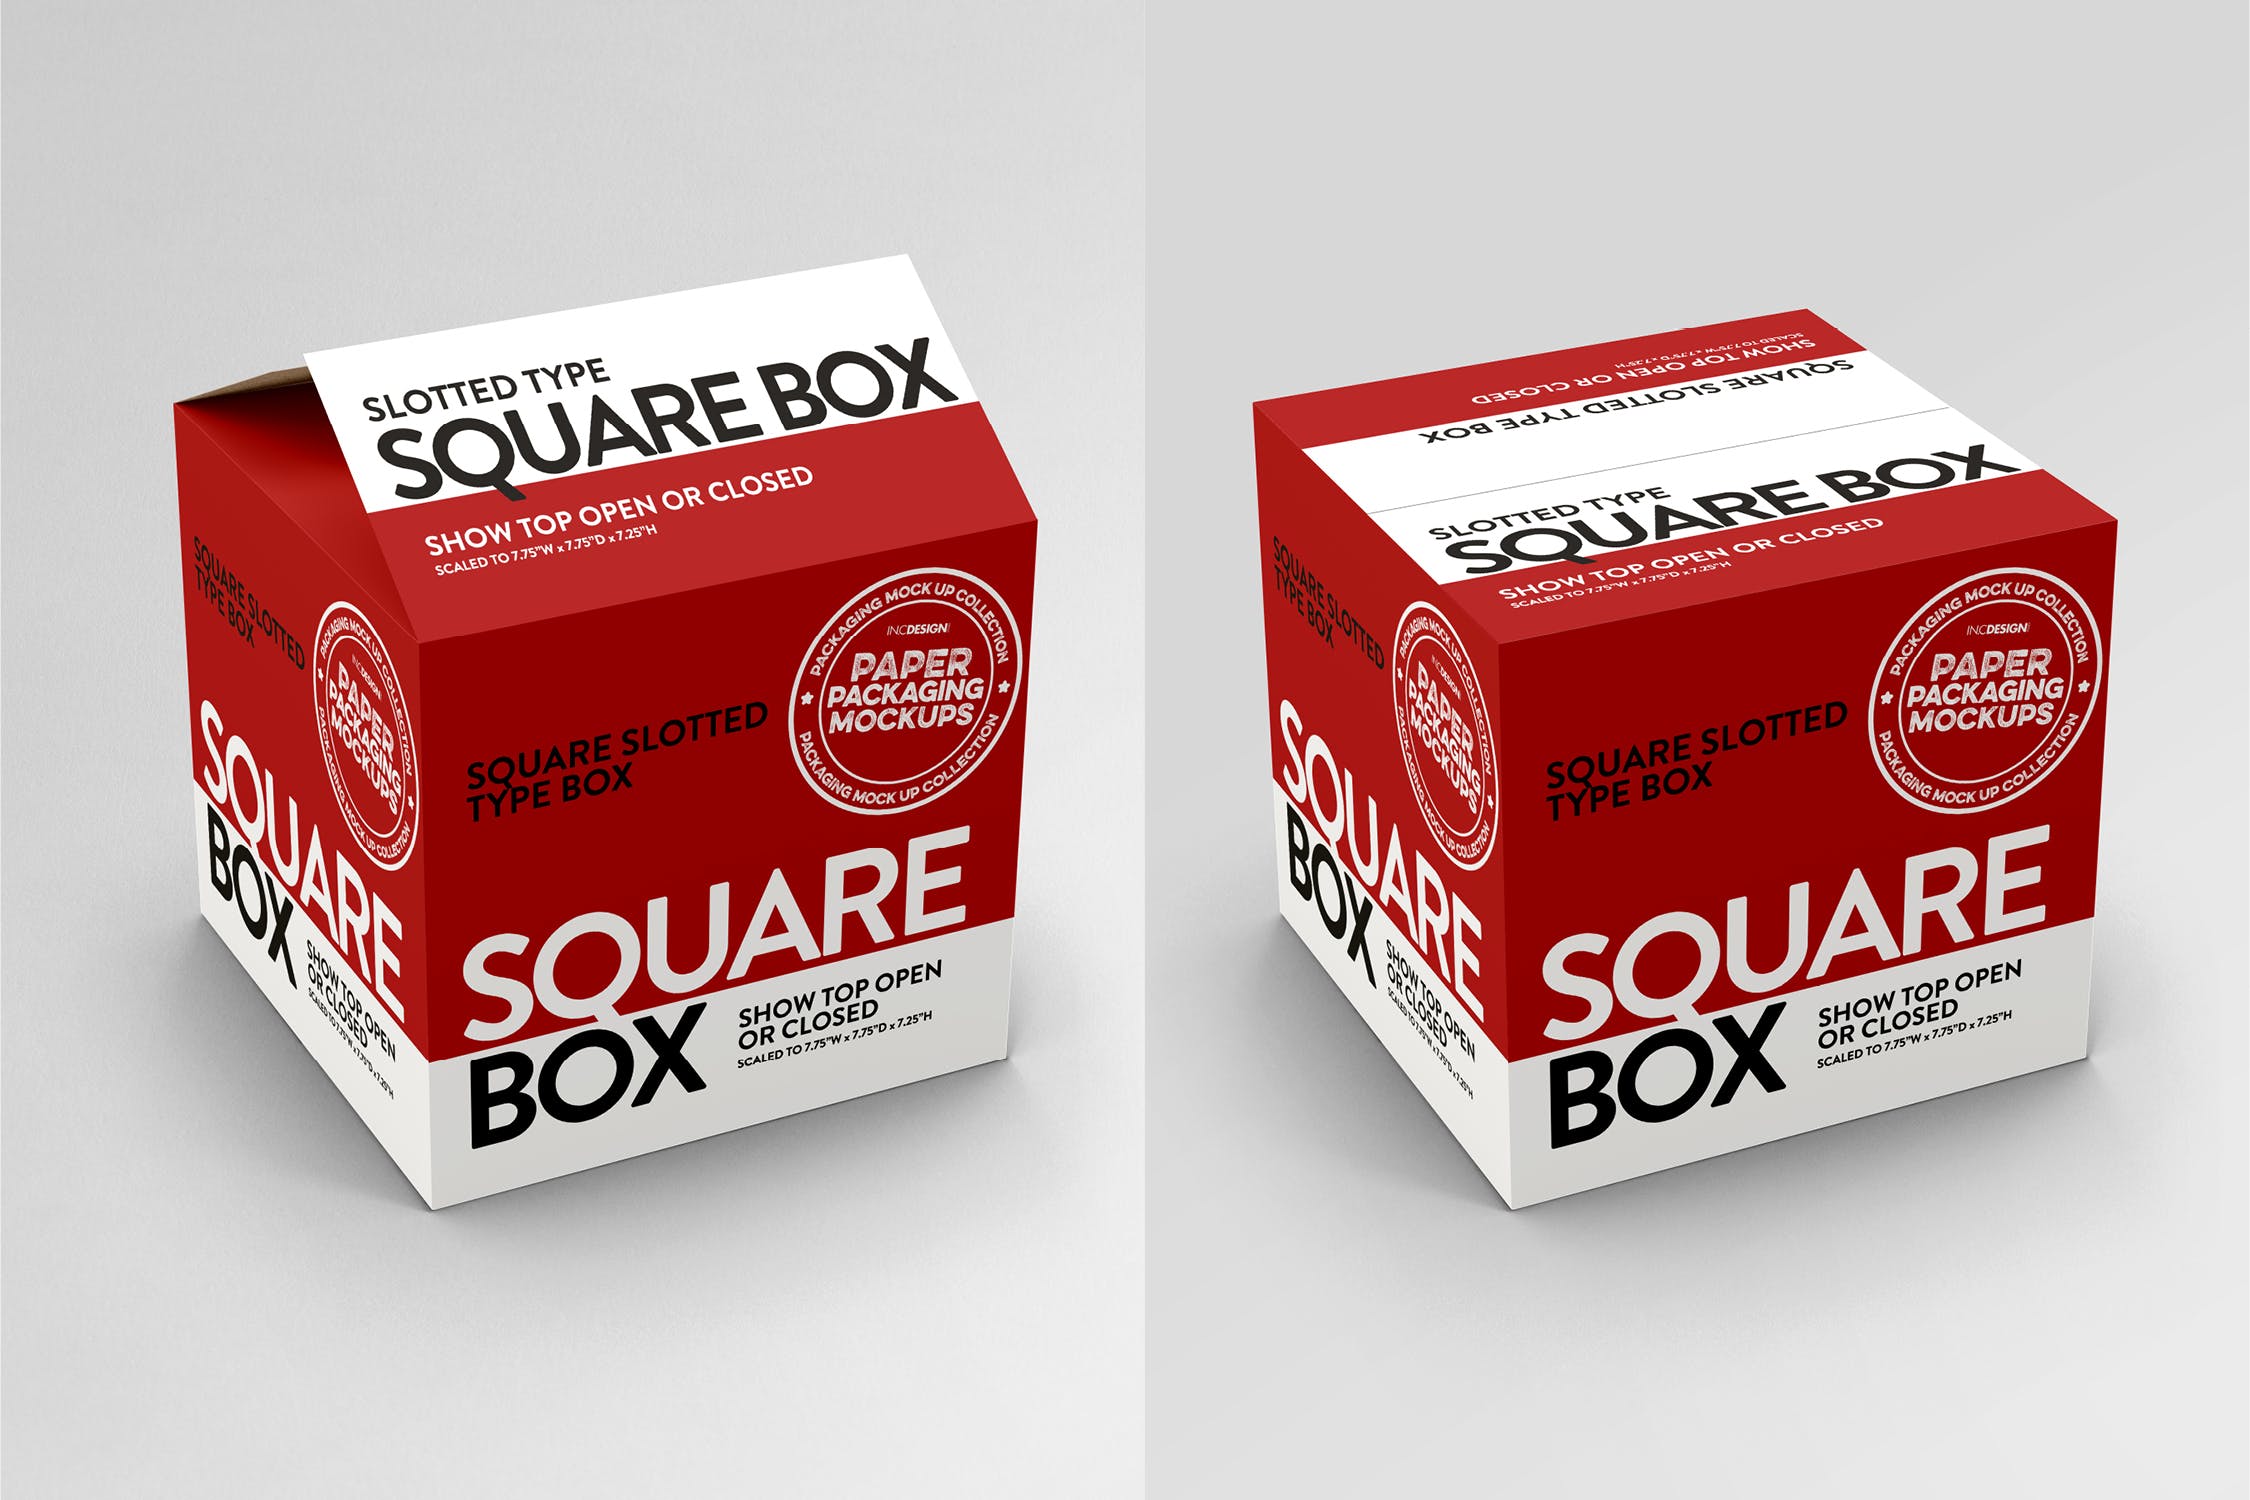 方形开槽纸盒包装设计效果图样机 Square Slotted-Type Paper Box Packaging Mockup插图1